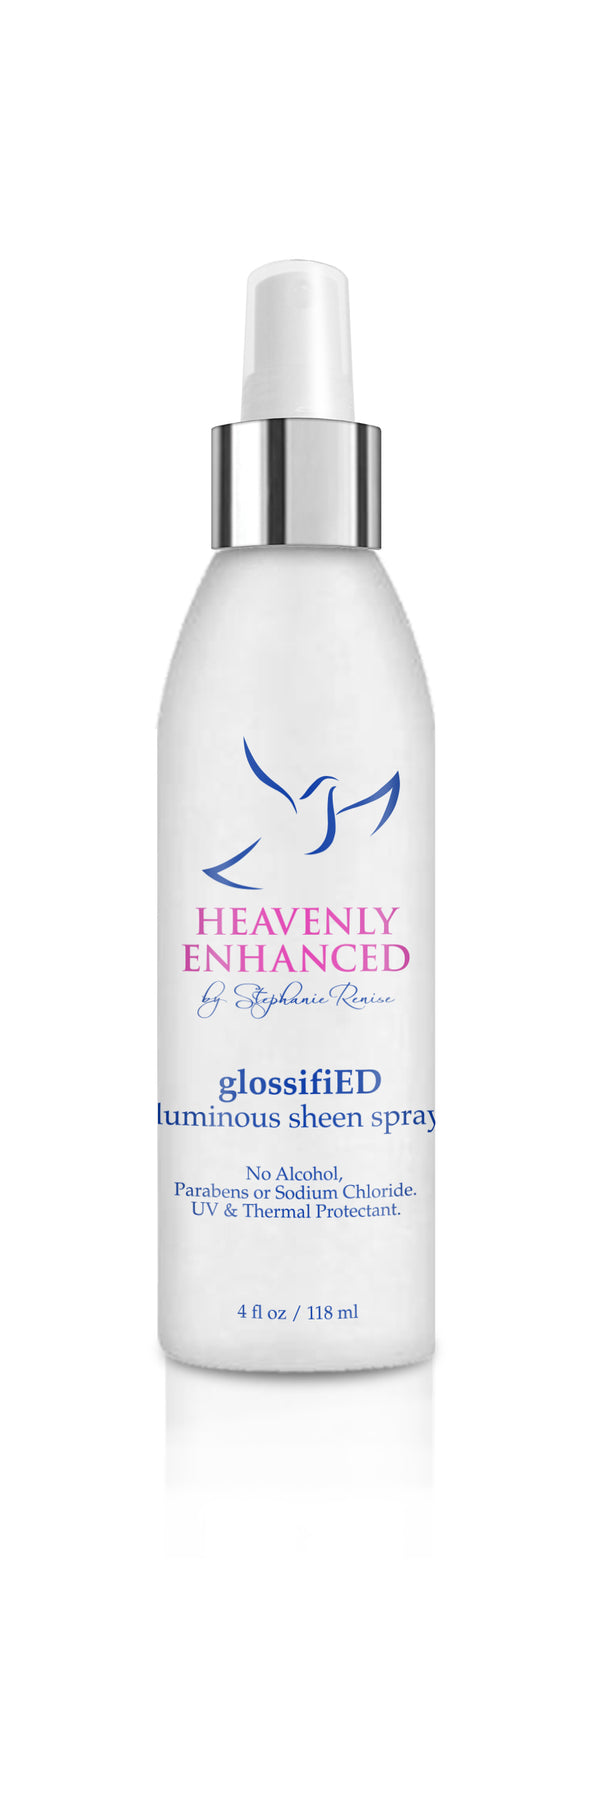 glossifiED - luminous sheen spray